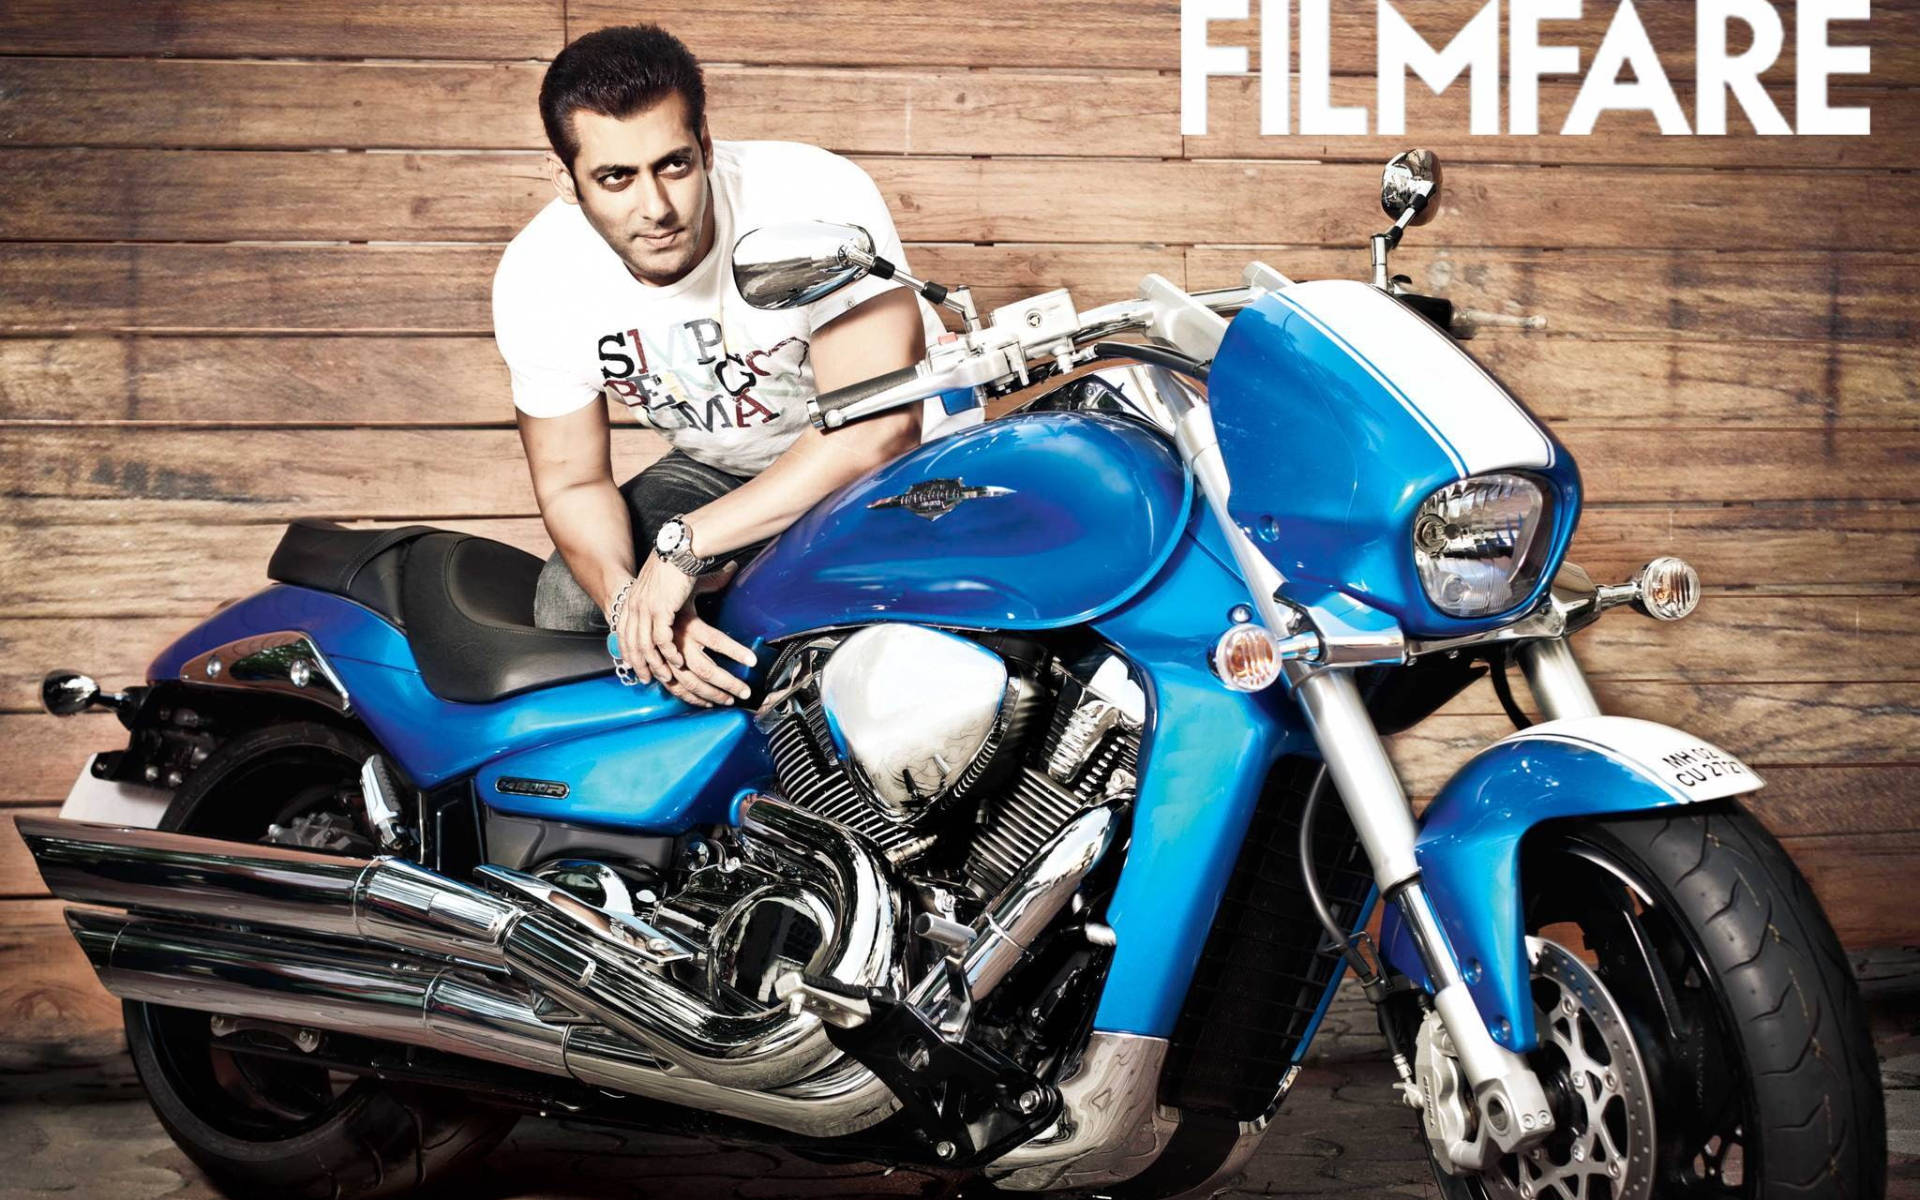 Salman Khan Filmfare Magazine